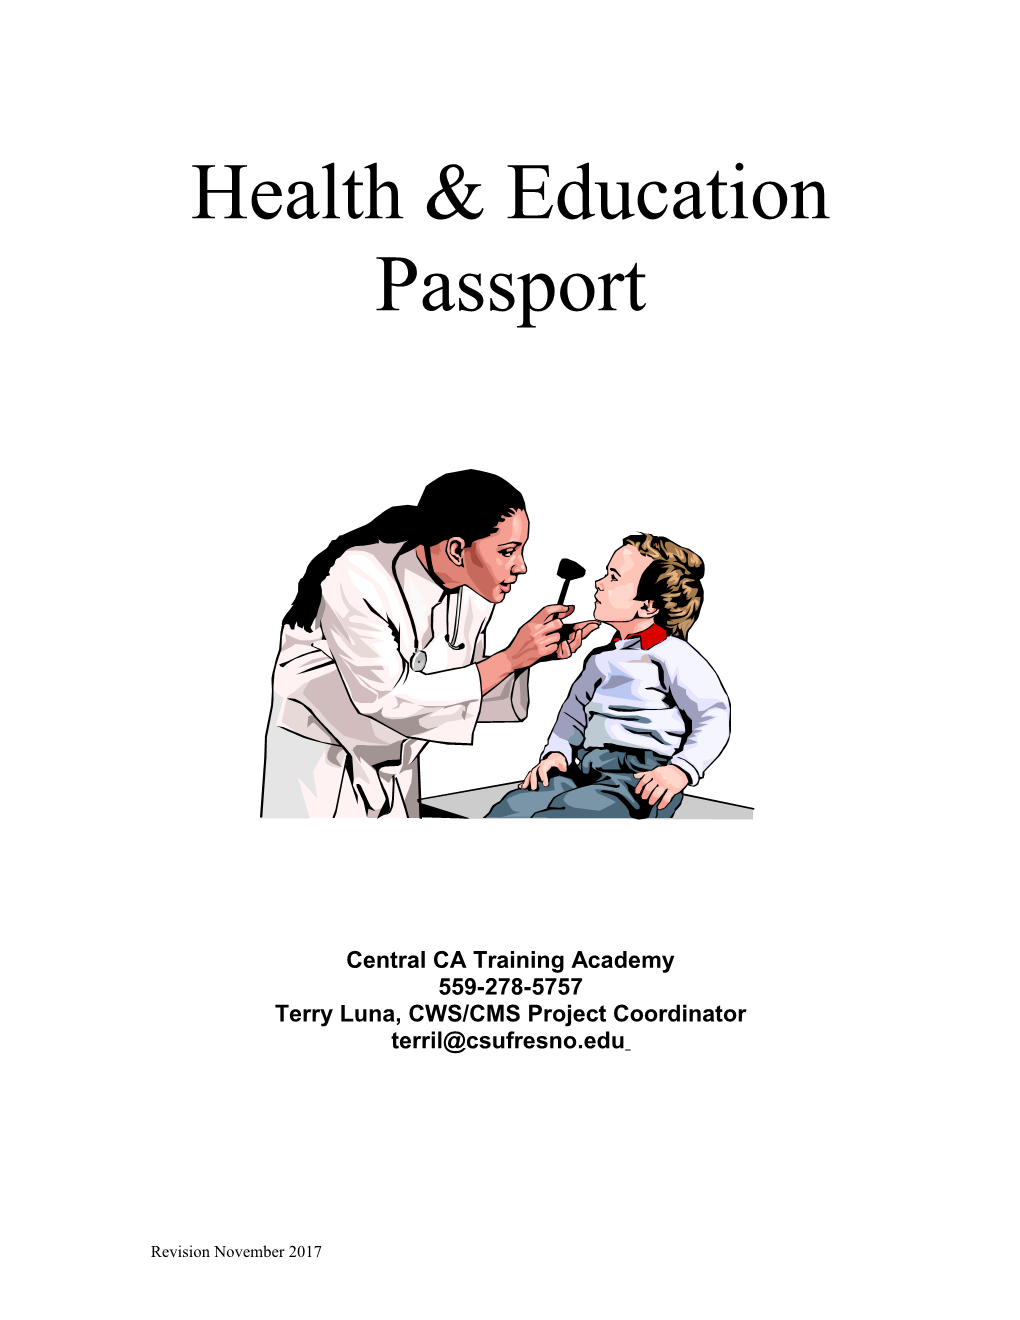 Creating the Health & Education Passport